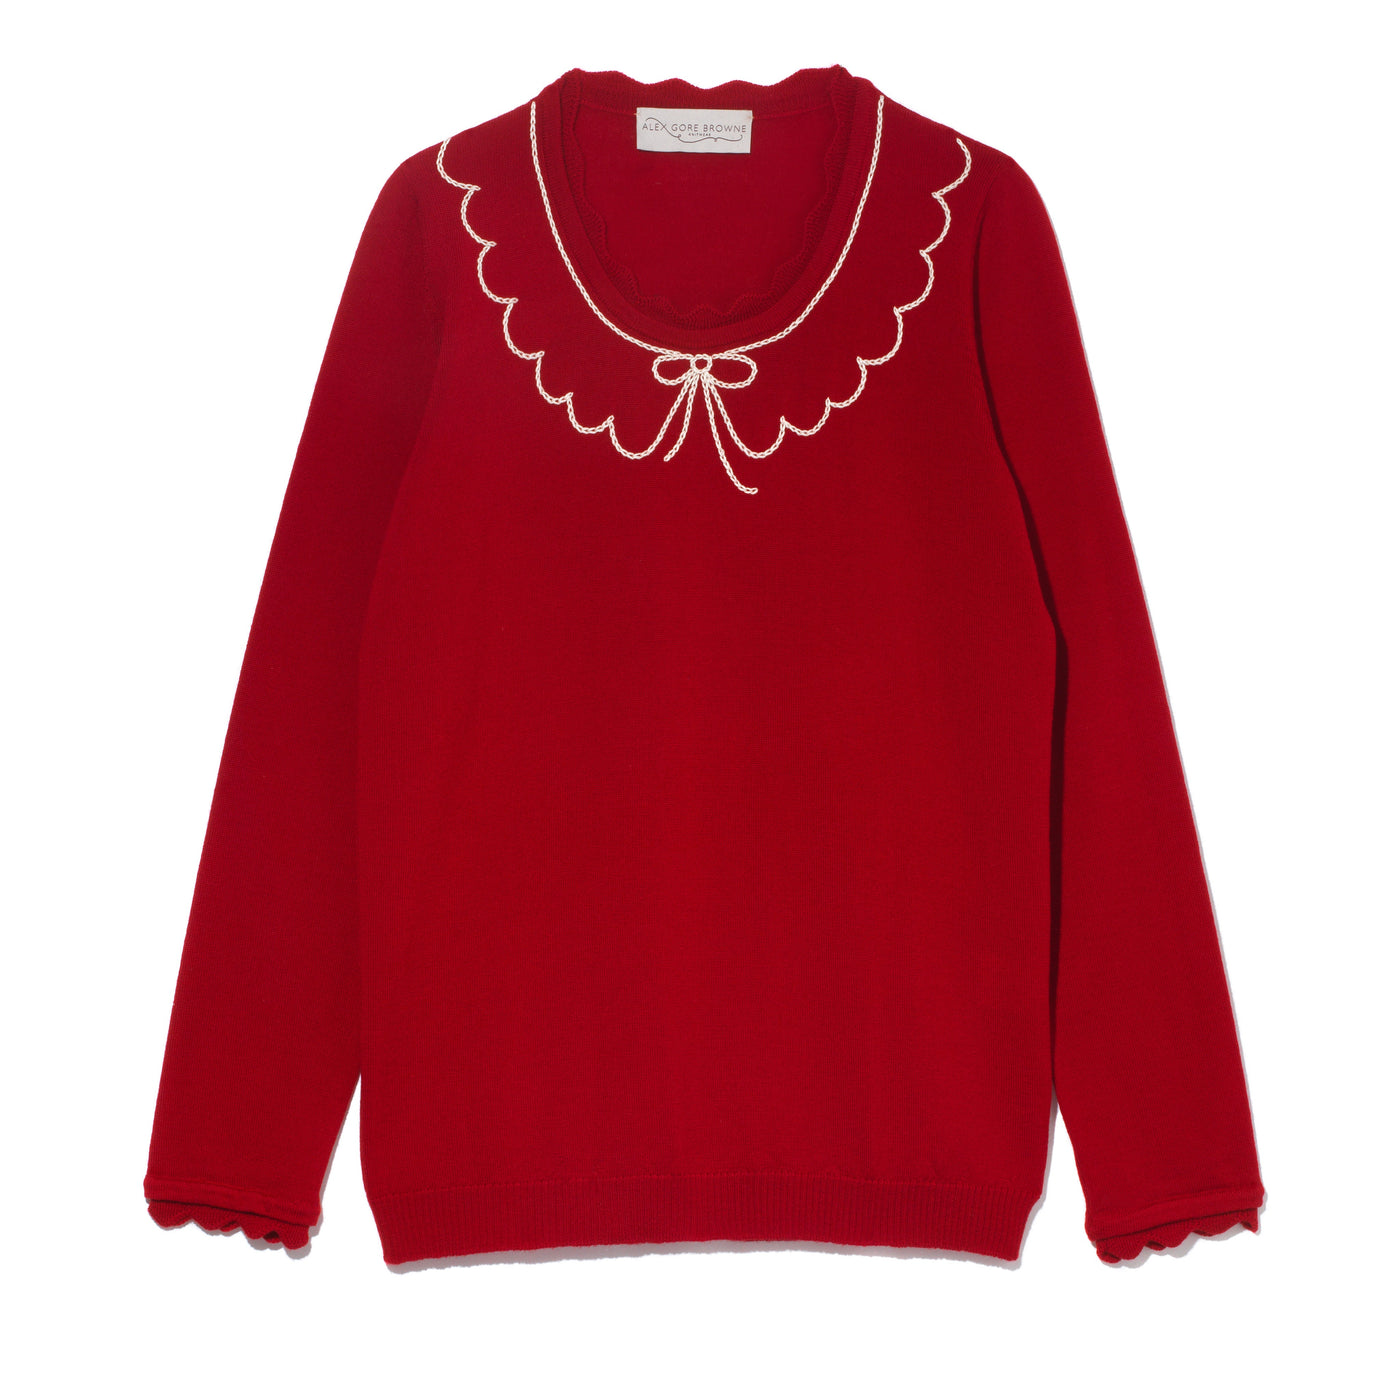 Peter Pan Collar Sweater - Red